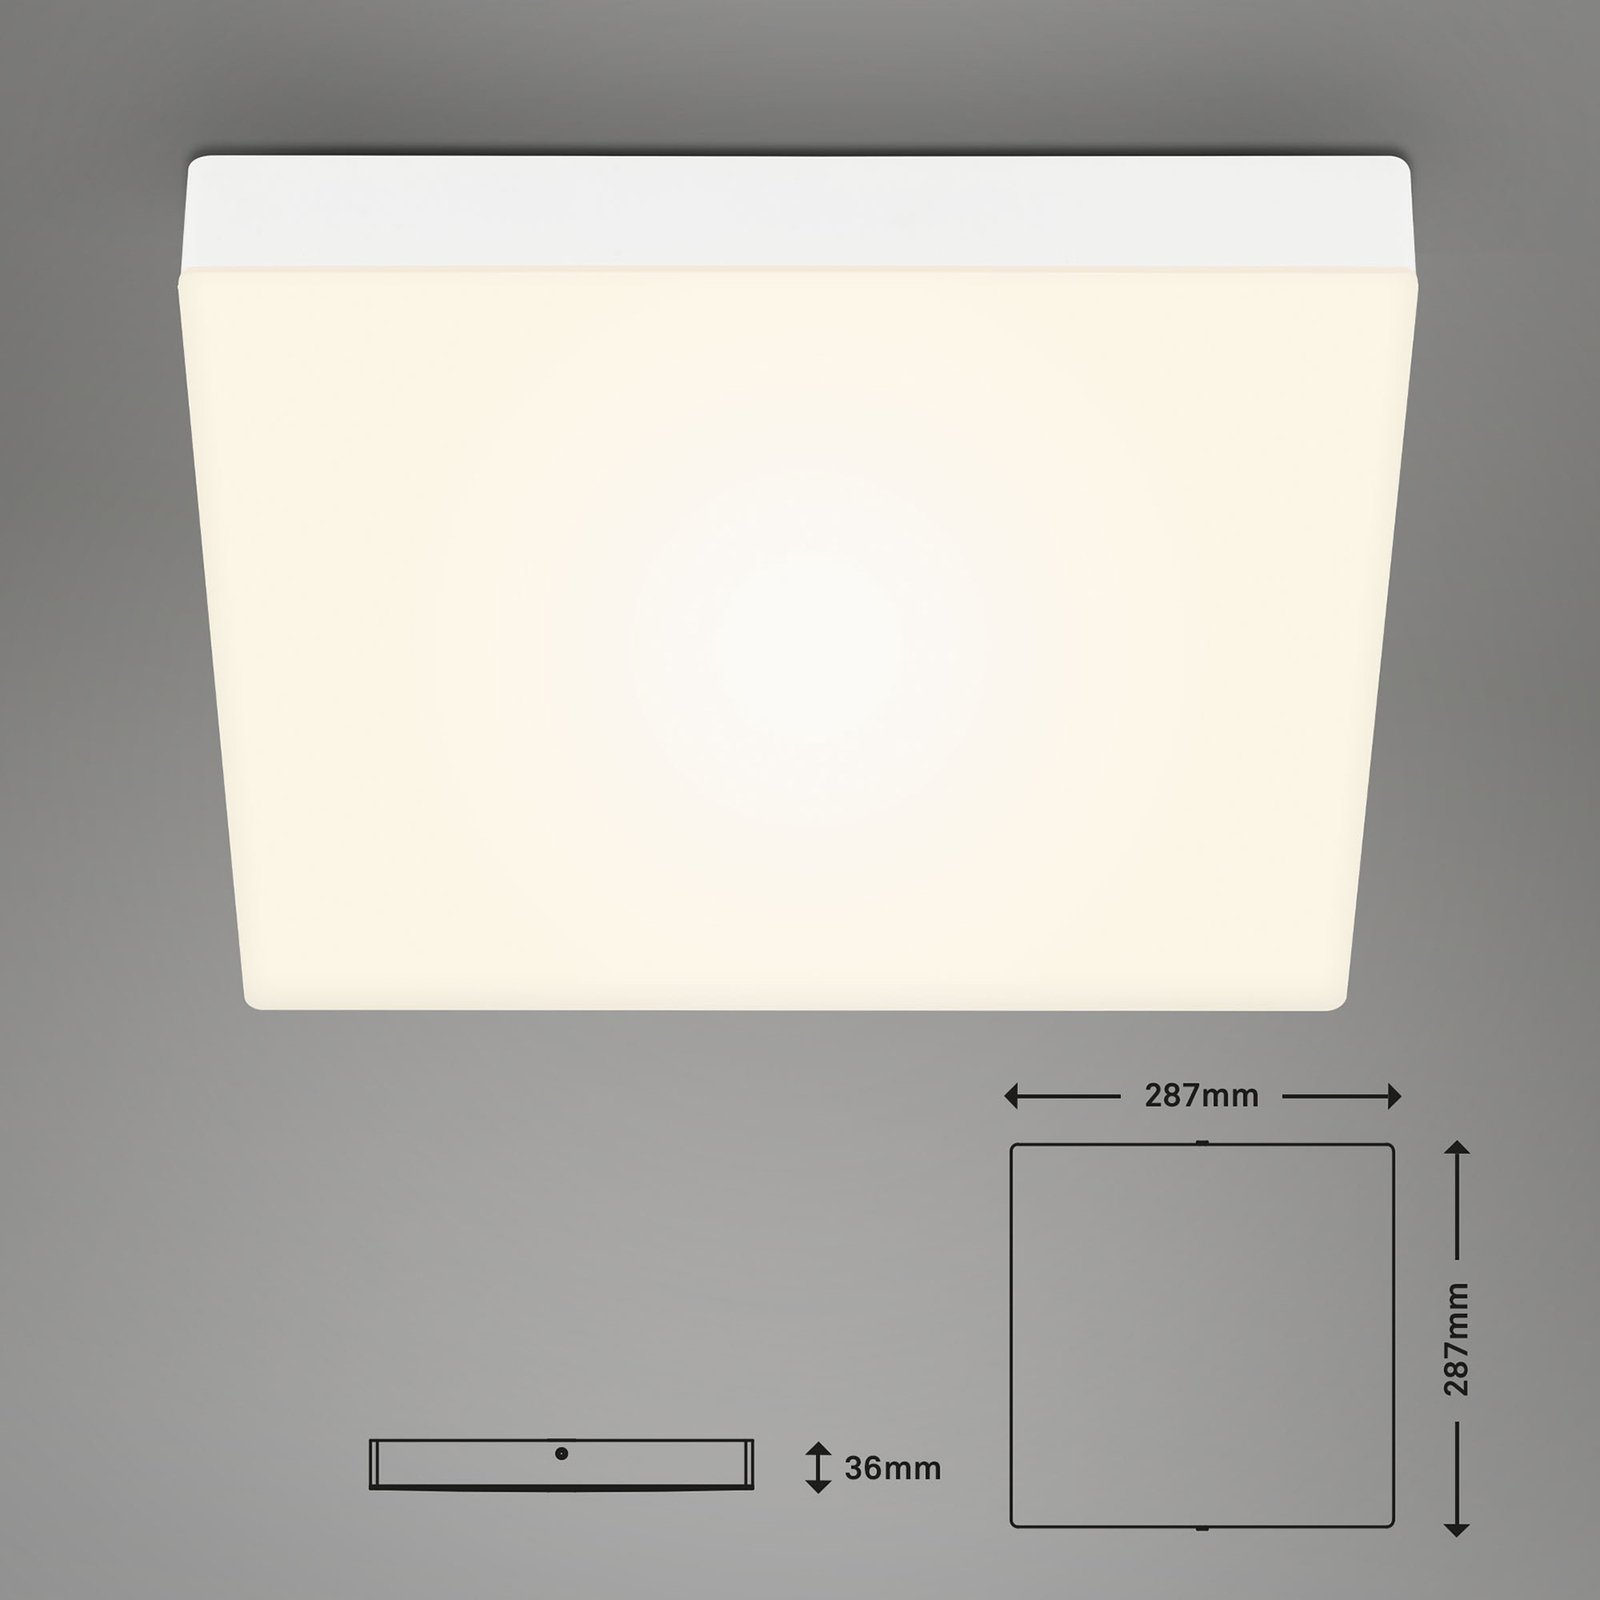 LED plafondlamp Flame, 3000K, 28,7x28,7cm, wit